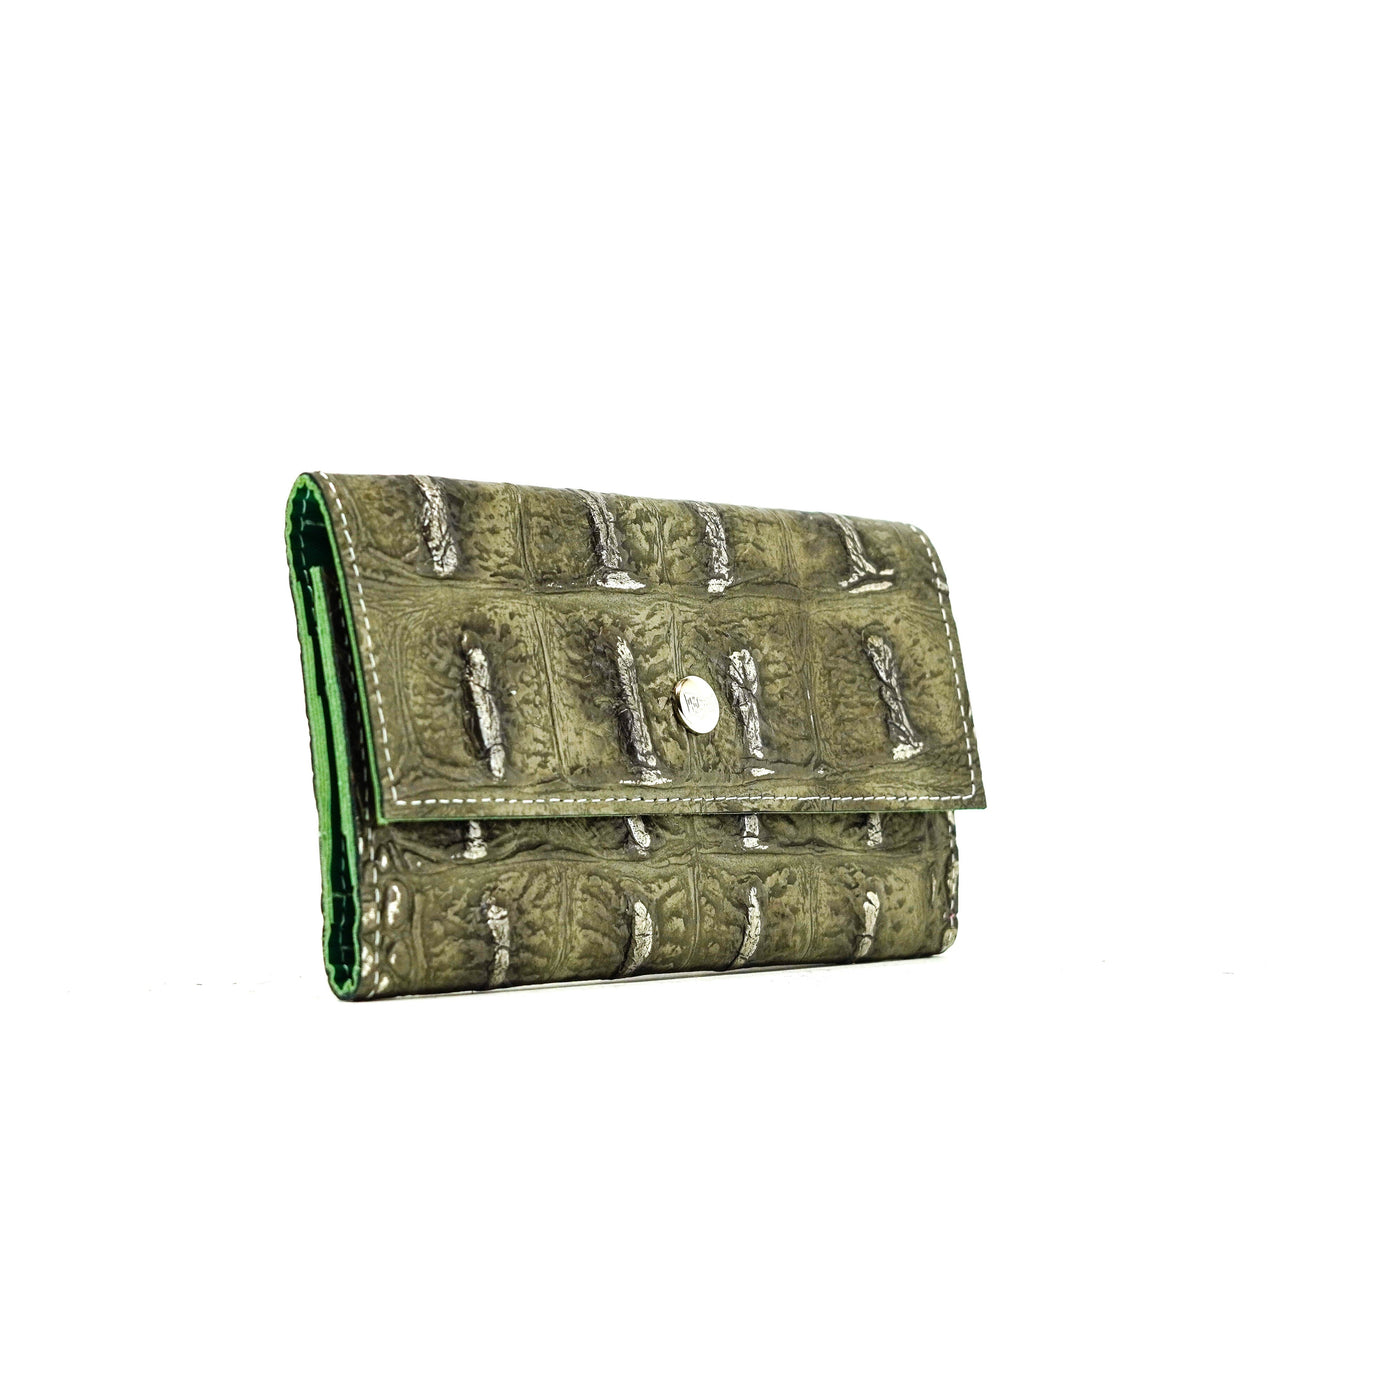 Kacey Wallet - All Embossed w/ Antique Jumbo Croc-Kacey Wallet-Western-Cowhide-Bags-Handmade-Products-Gifts-Dancing Cactus Designs